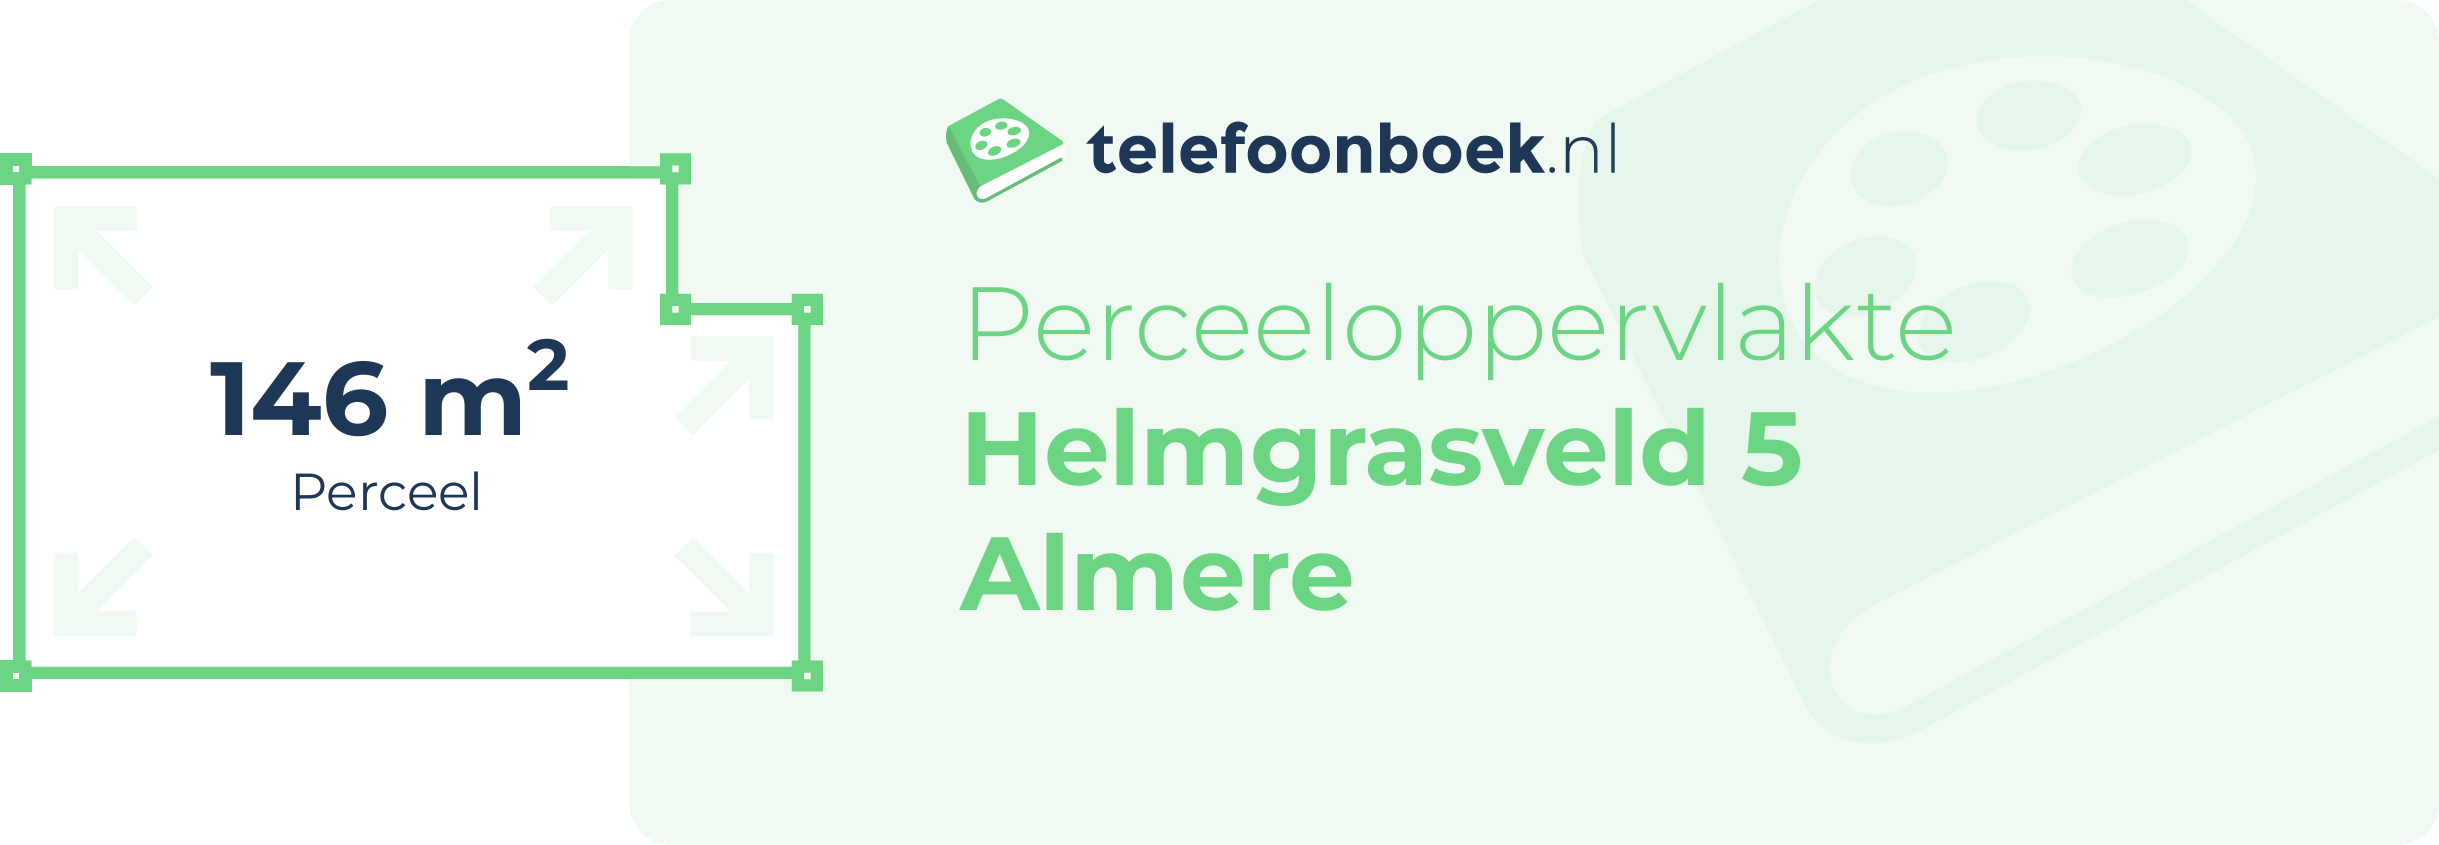 Perceeloppervlakte Helmgrasveld 5 Almere